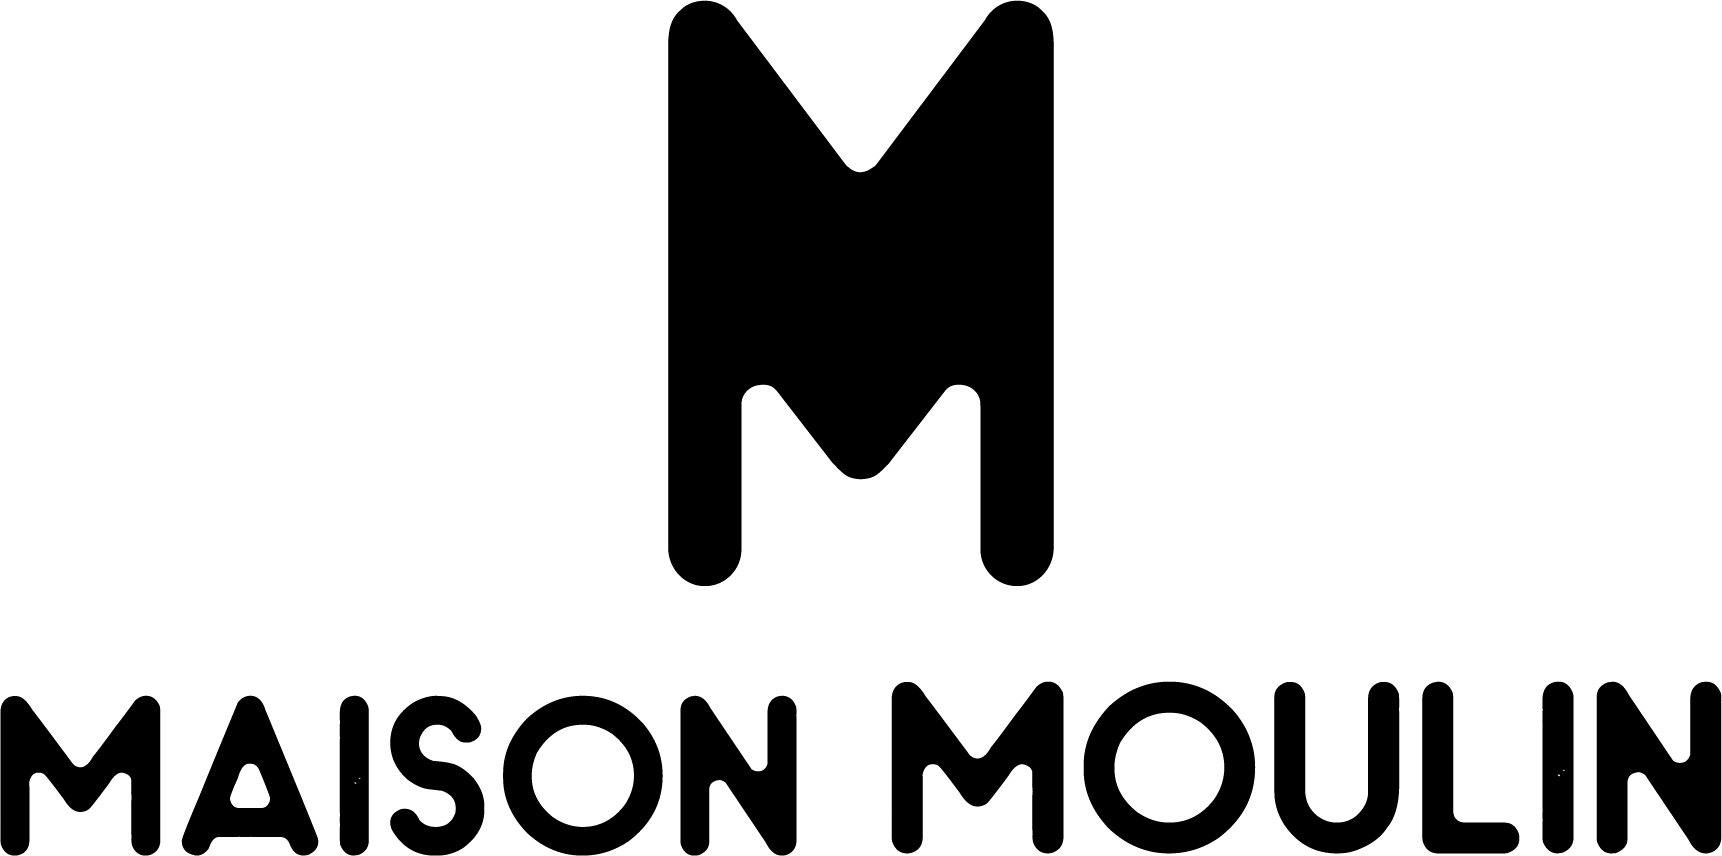 maison-moulin-logo